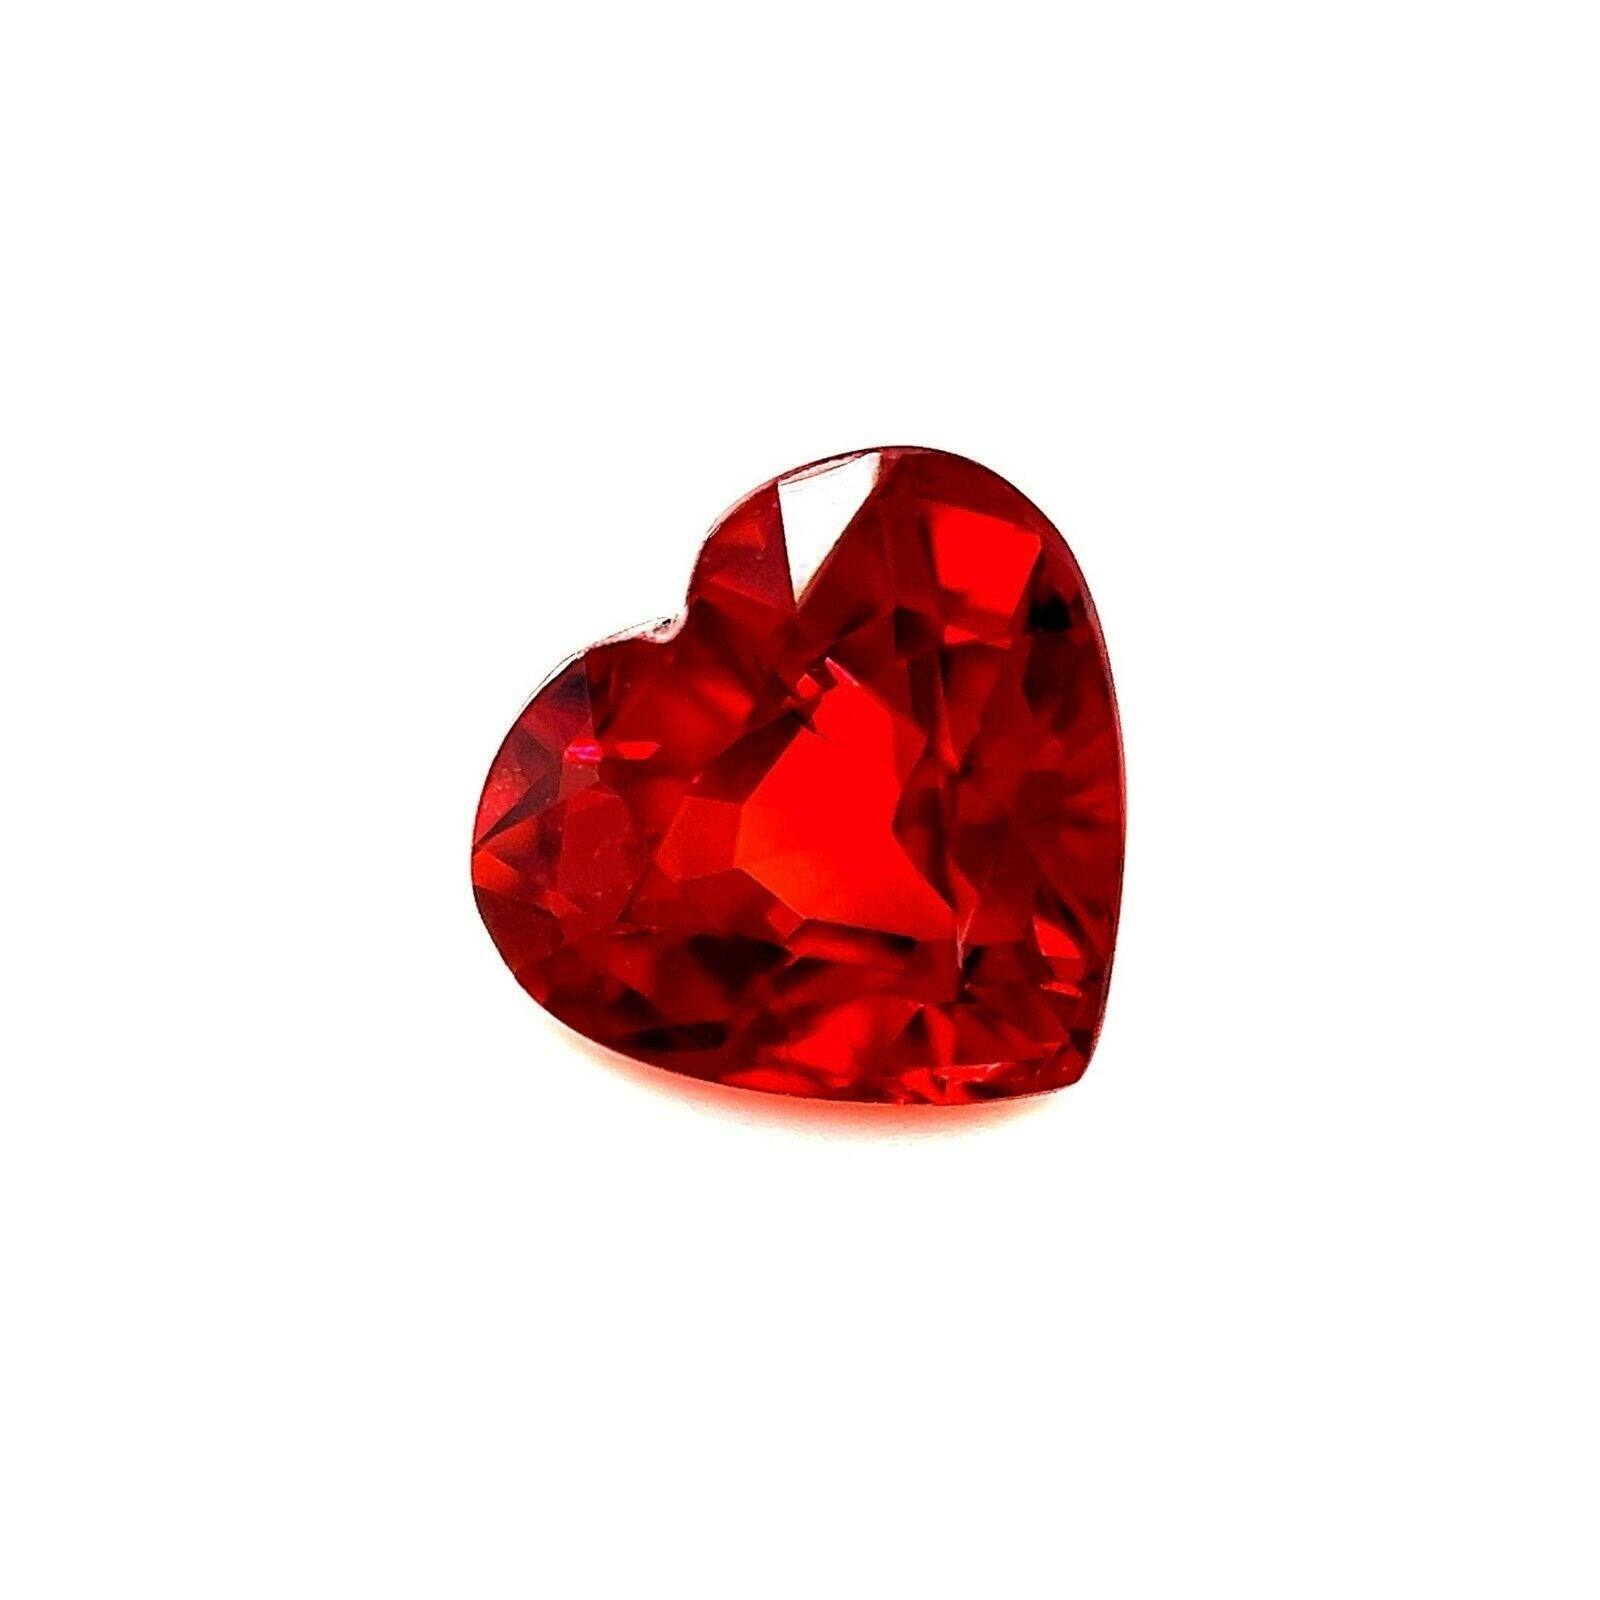 Fine1.13ct Vivid Orange Red Spessartine Garnet Heart Cut Loose Gem 6.2x5.7mm For Sale